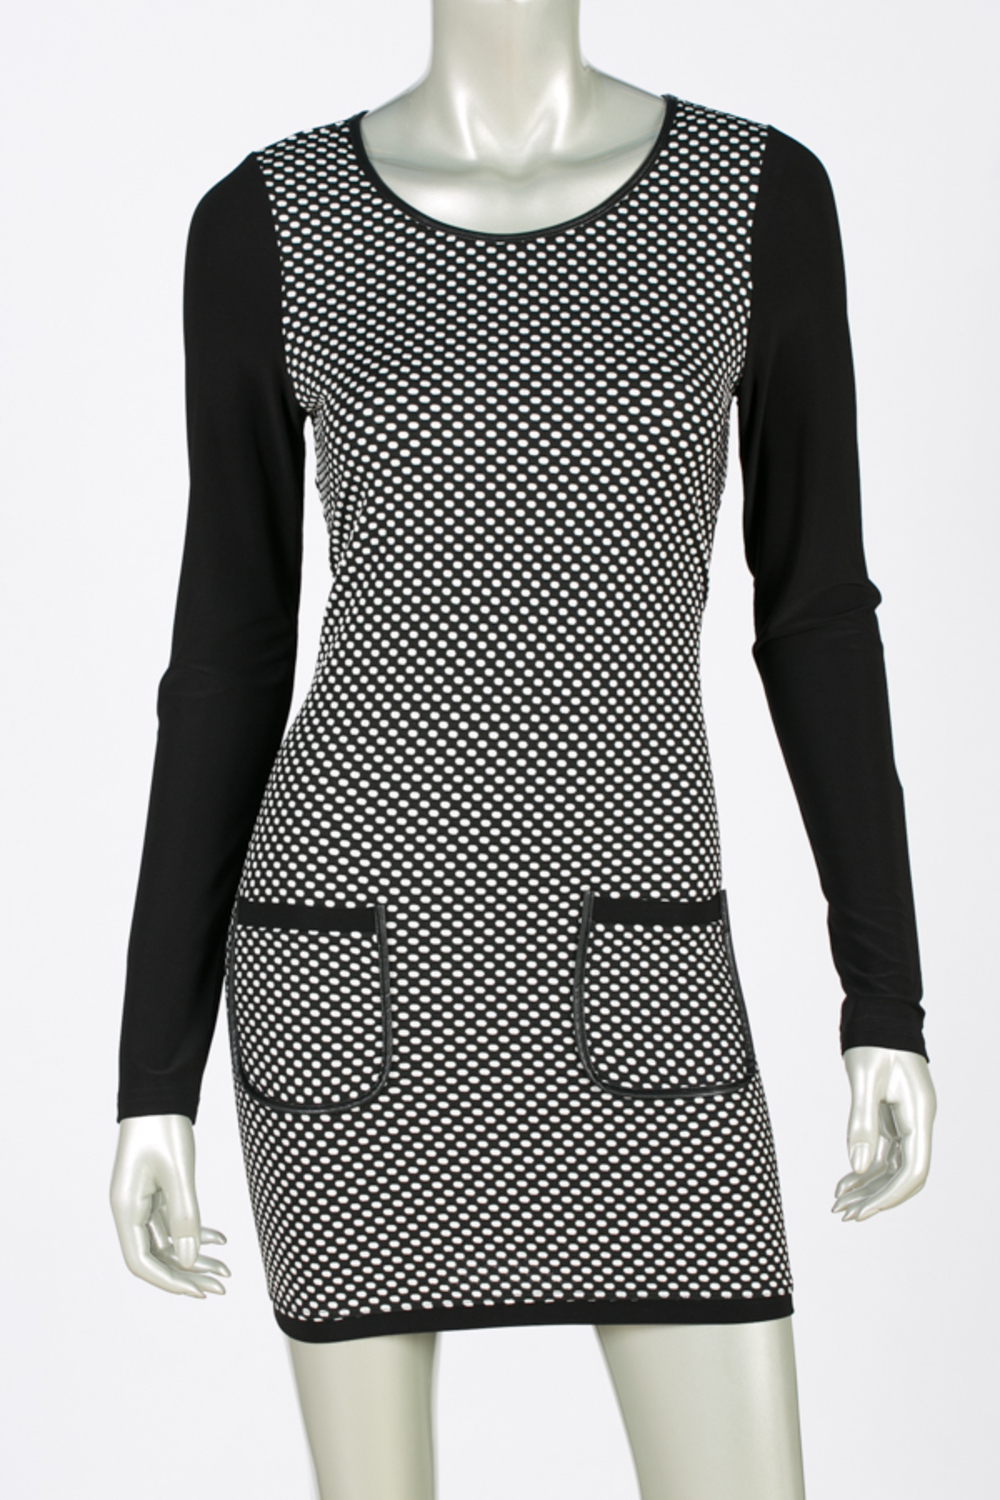 Joseph Ribkoff tunic style 143643. Black/white